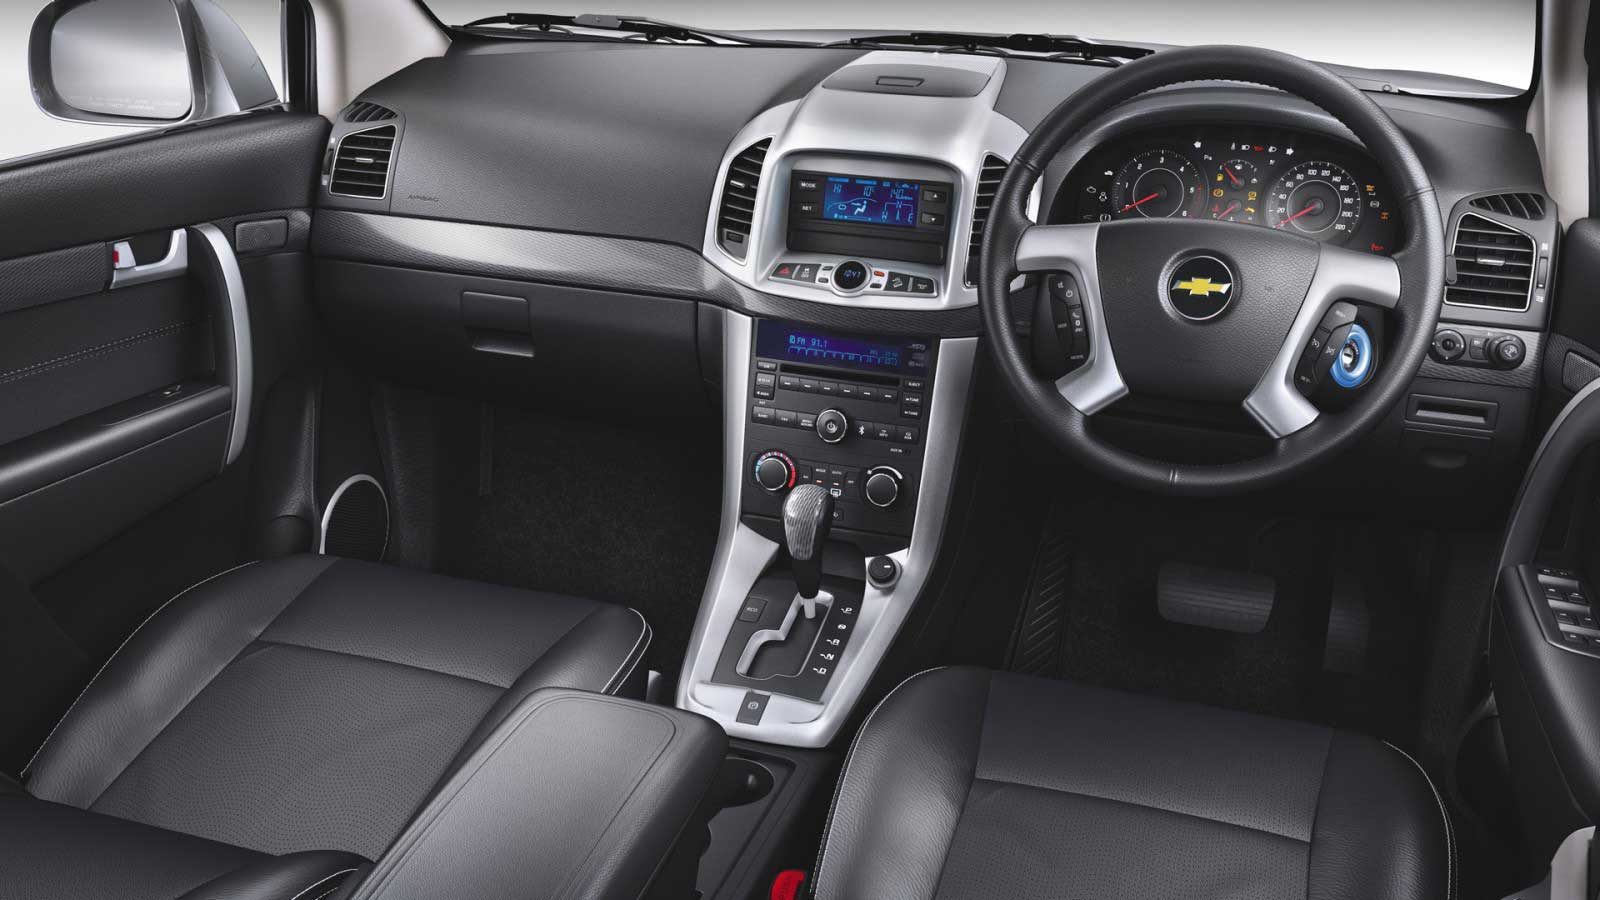 Chevrolet Captiva LTZ AWD 2.2 Interior front view